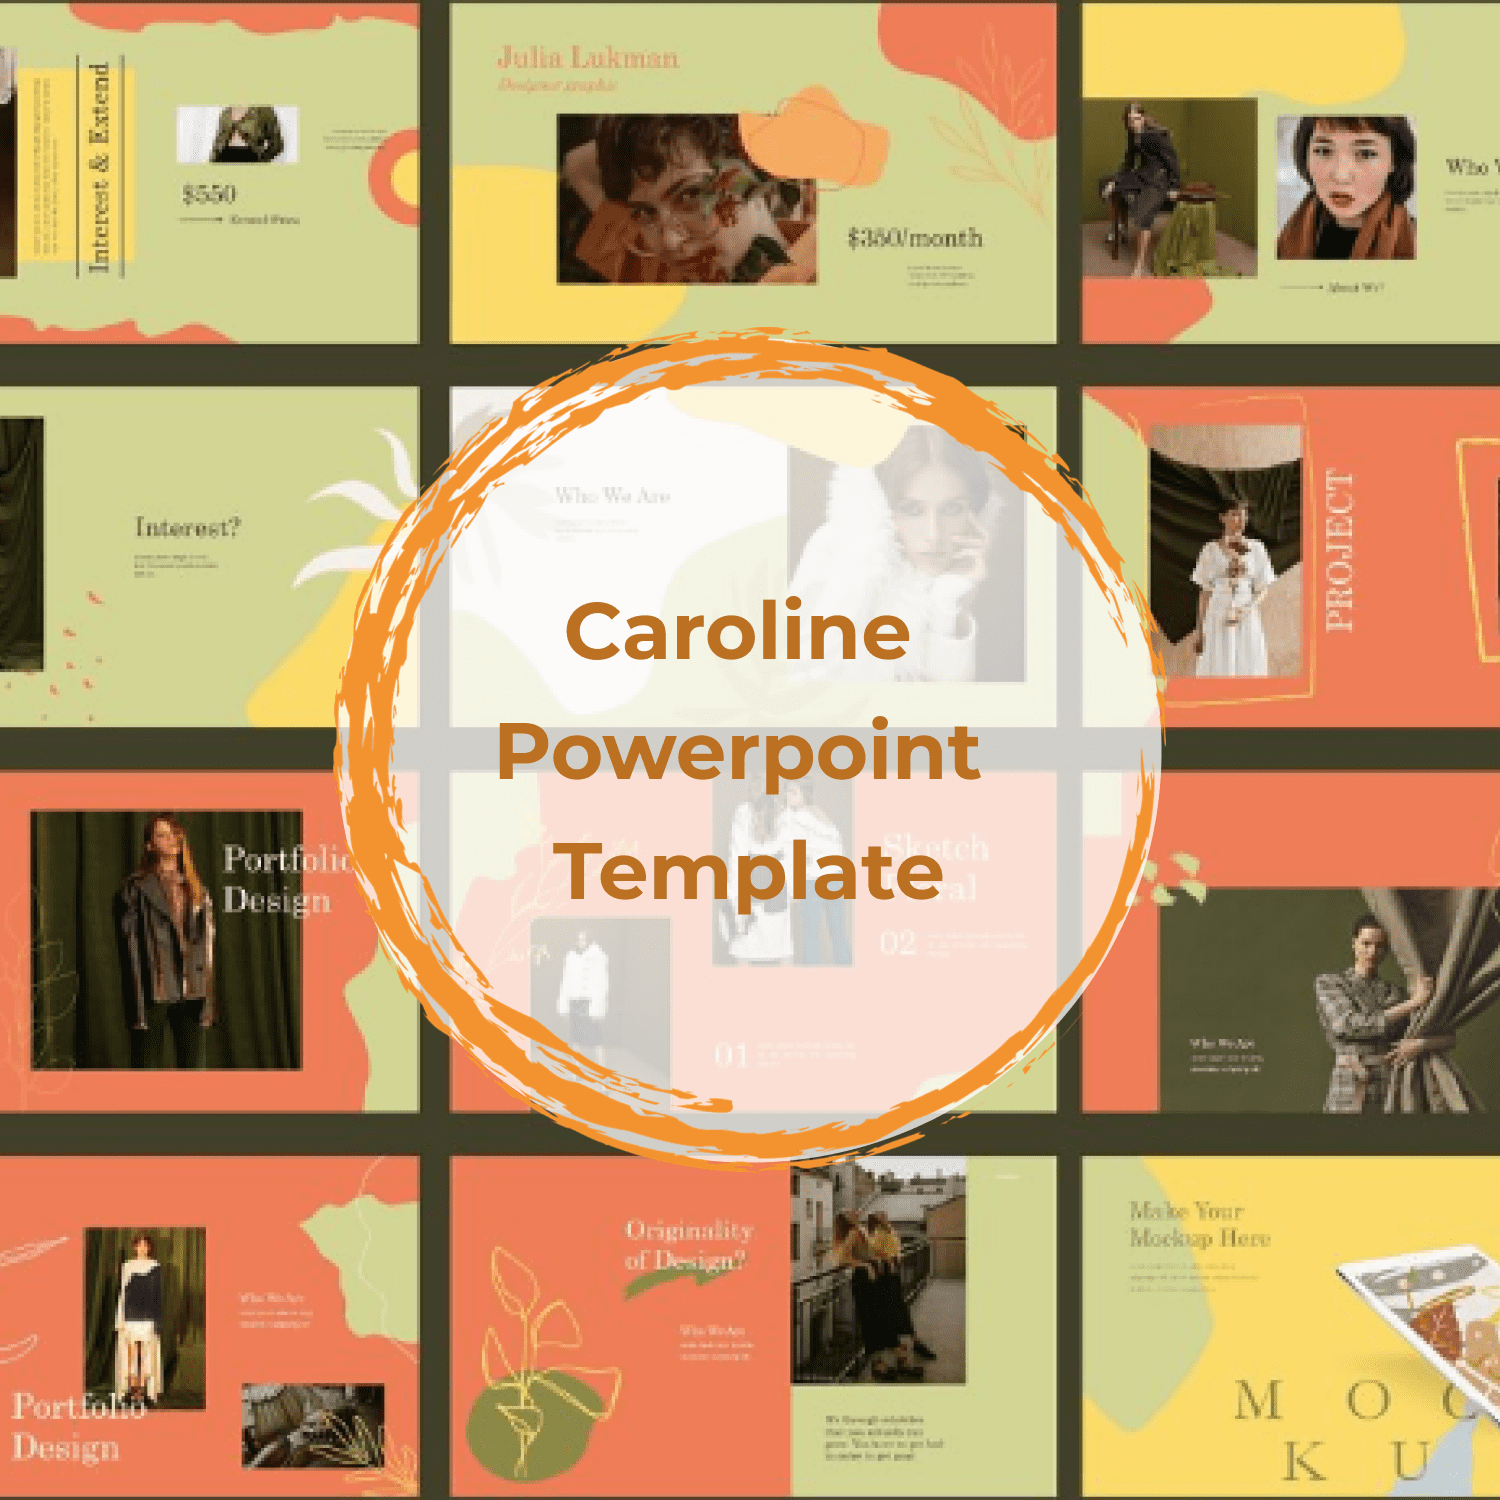 Caroline Powerpoint Template main cover.